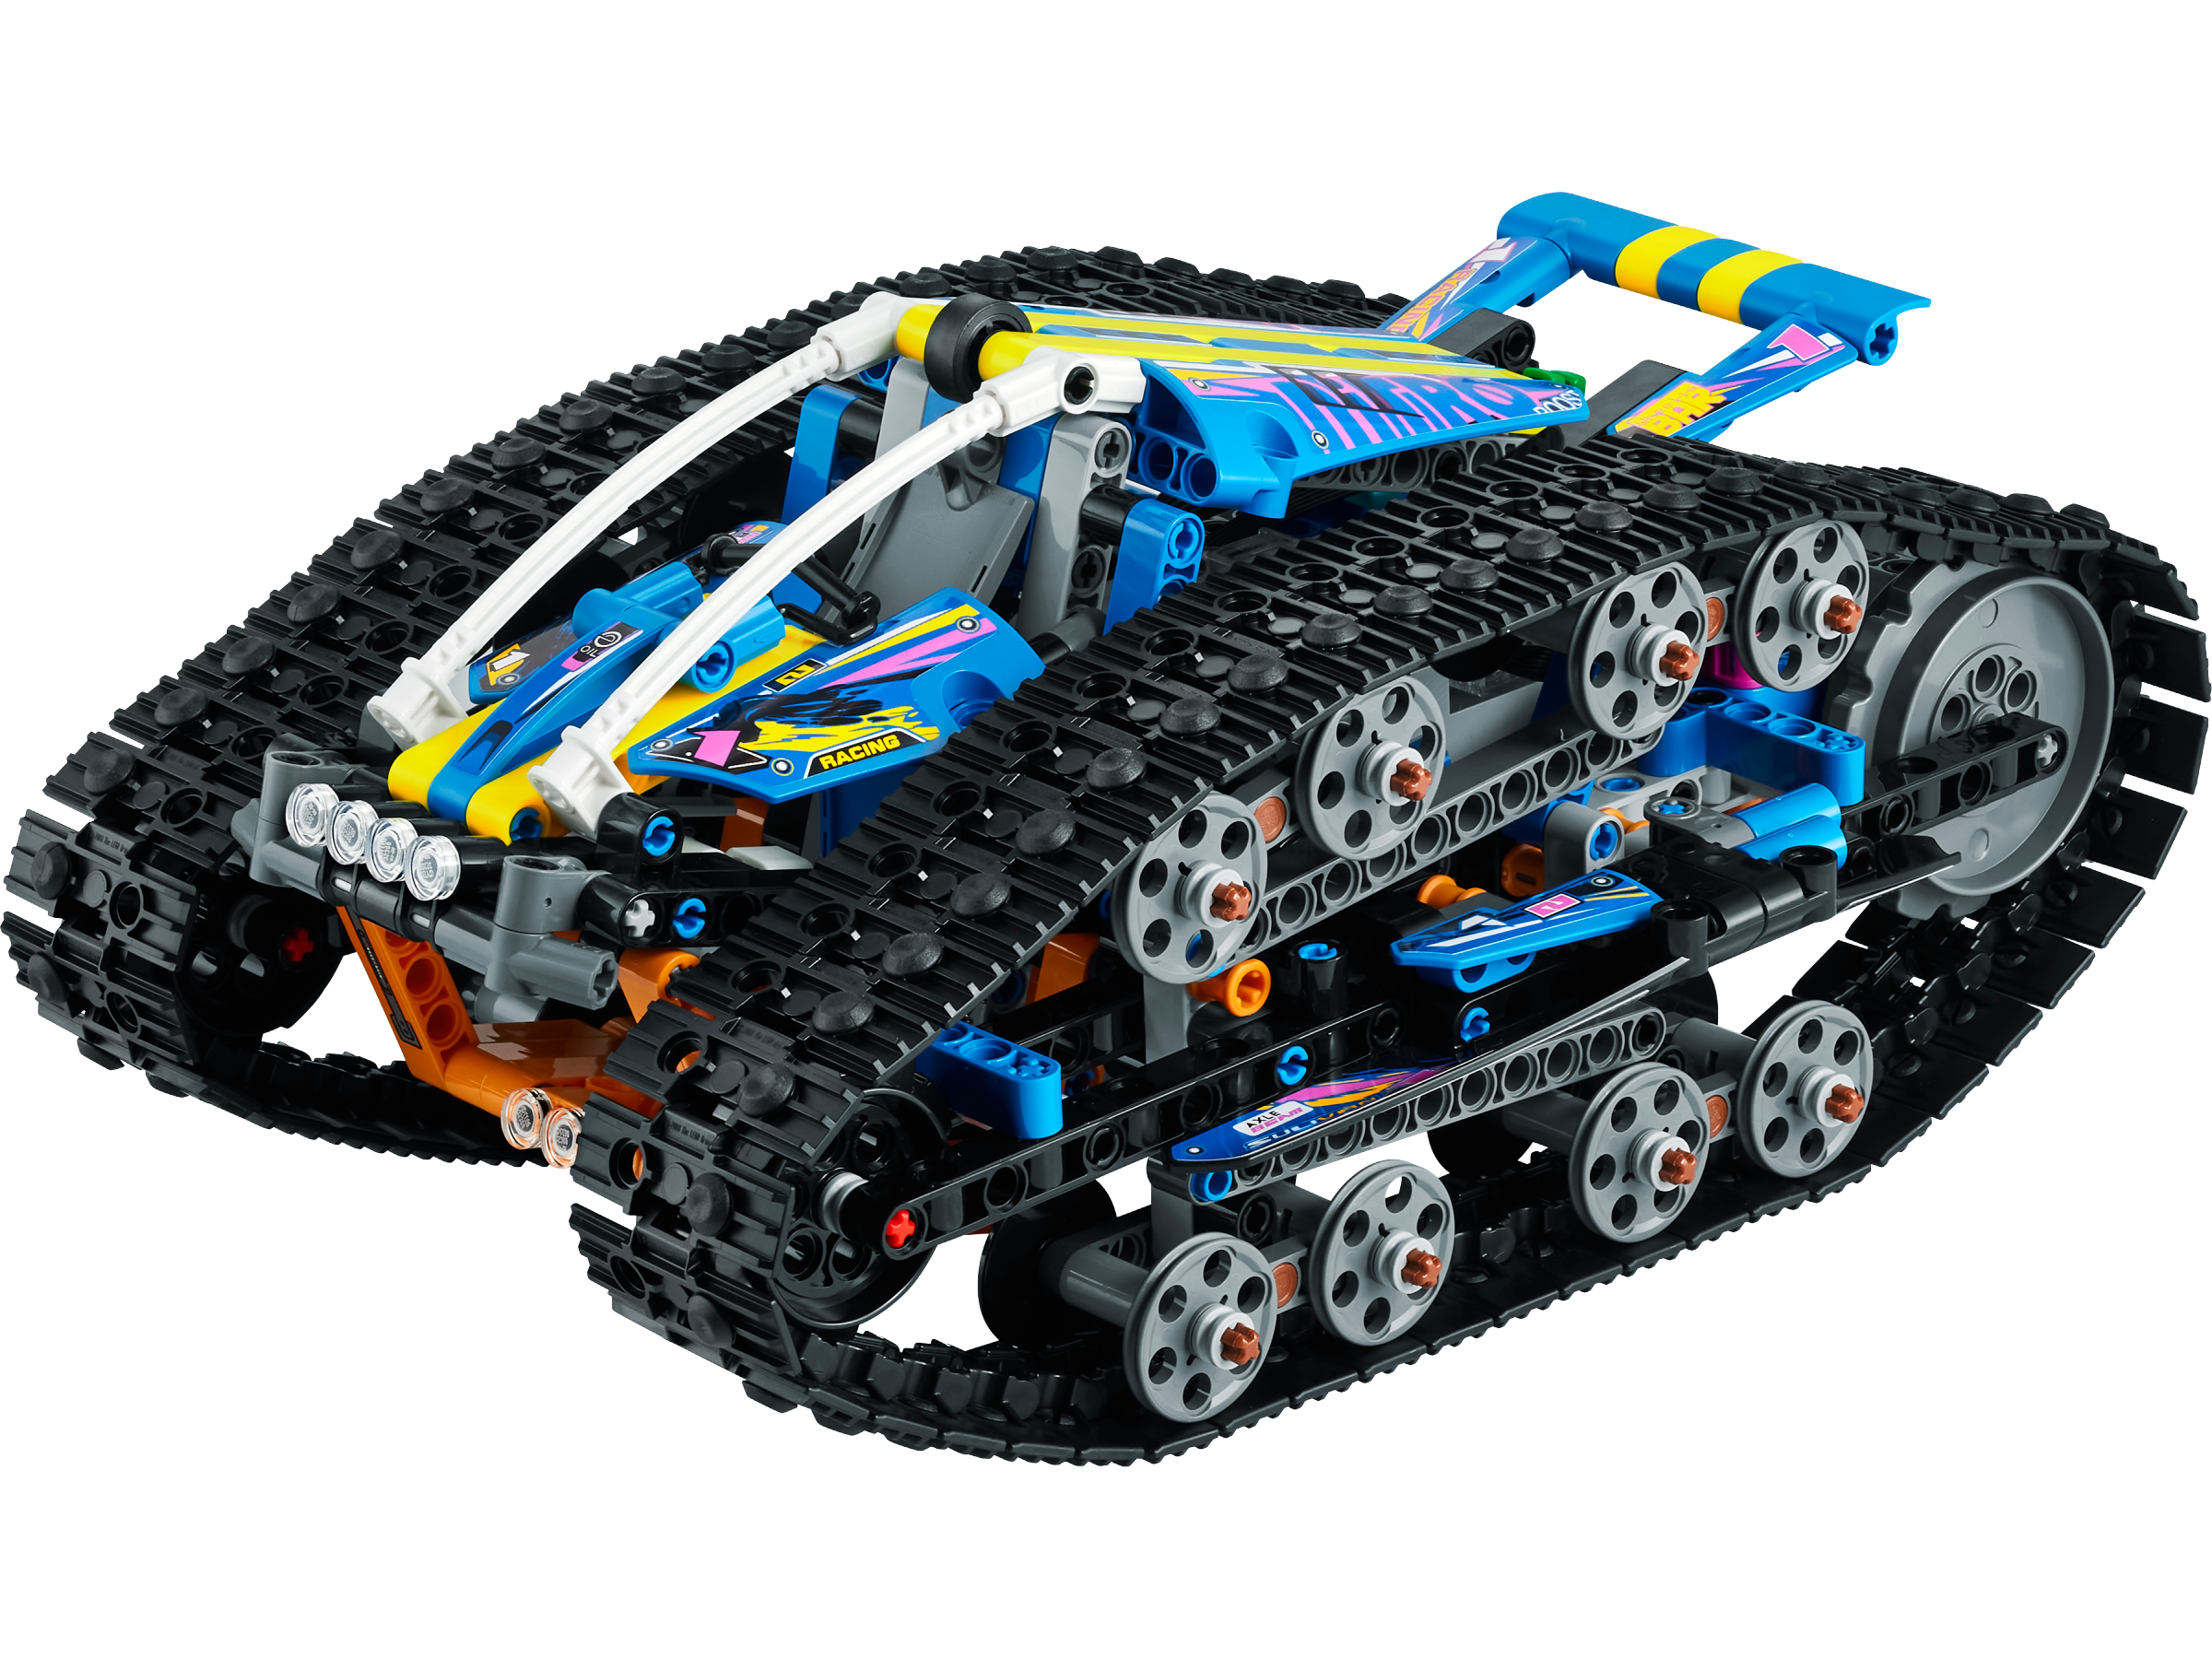 LEGO Technic Mindstorms Axles set Lot of 18 